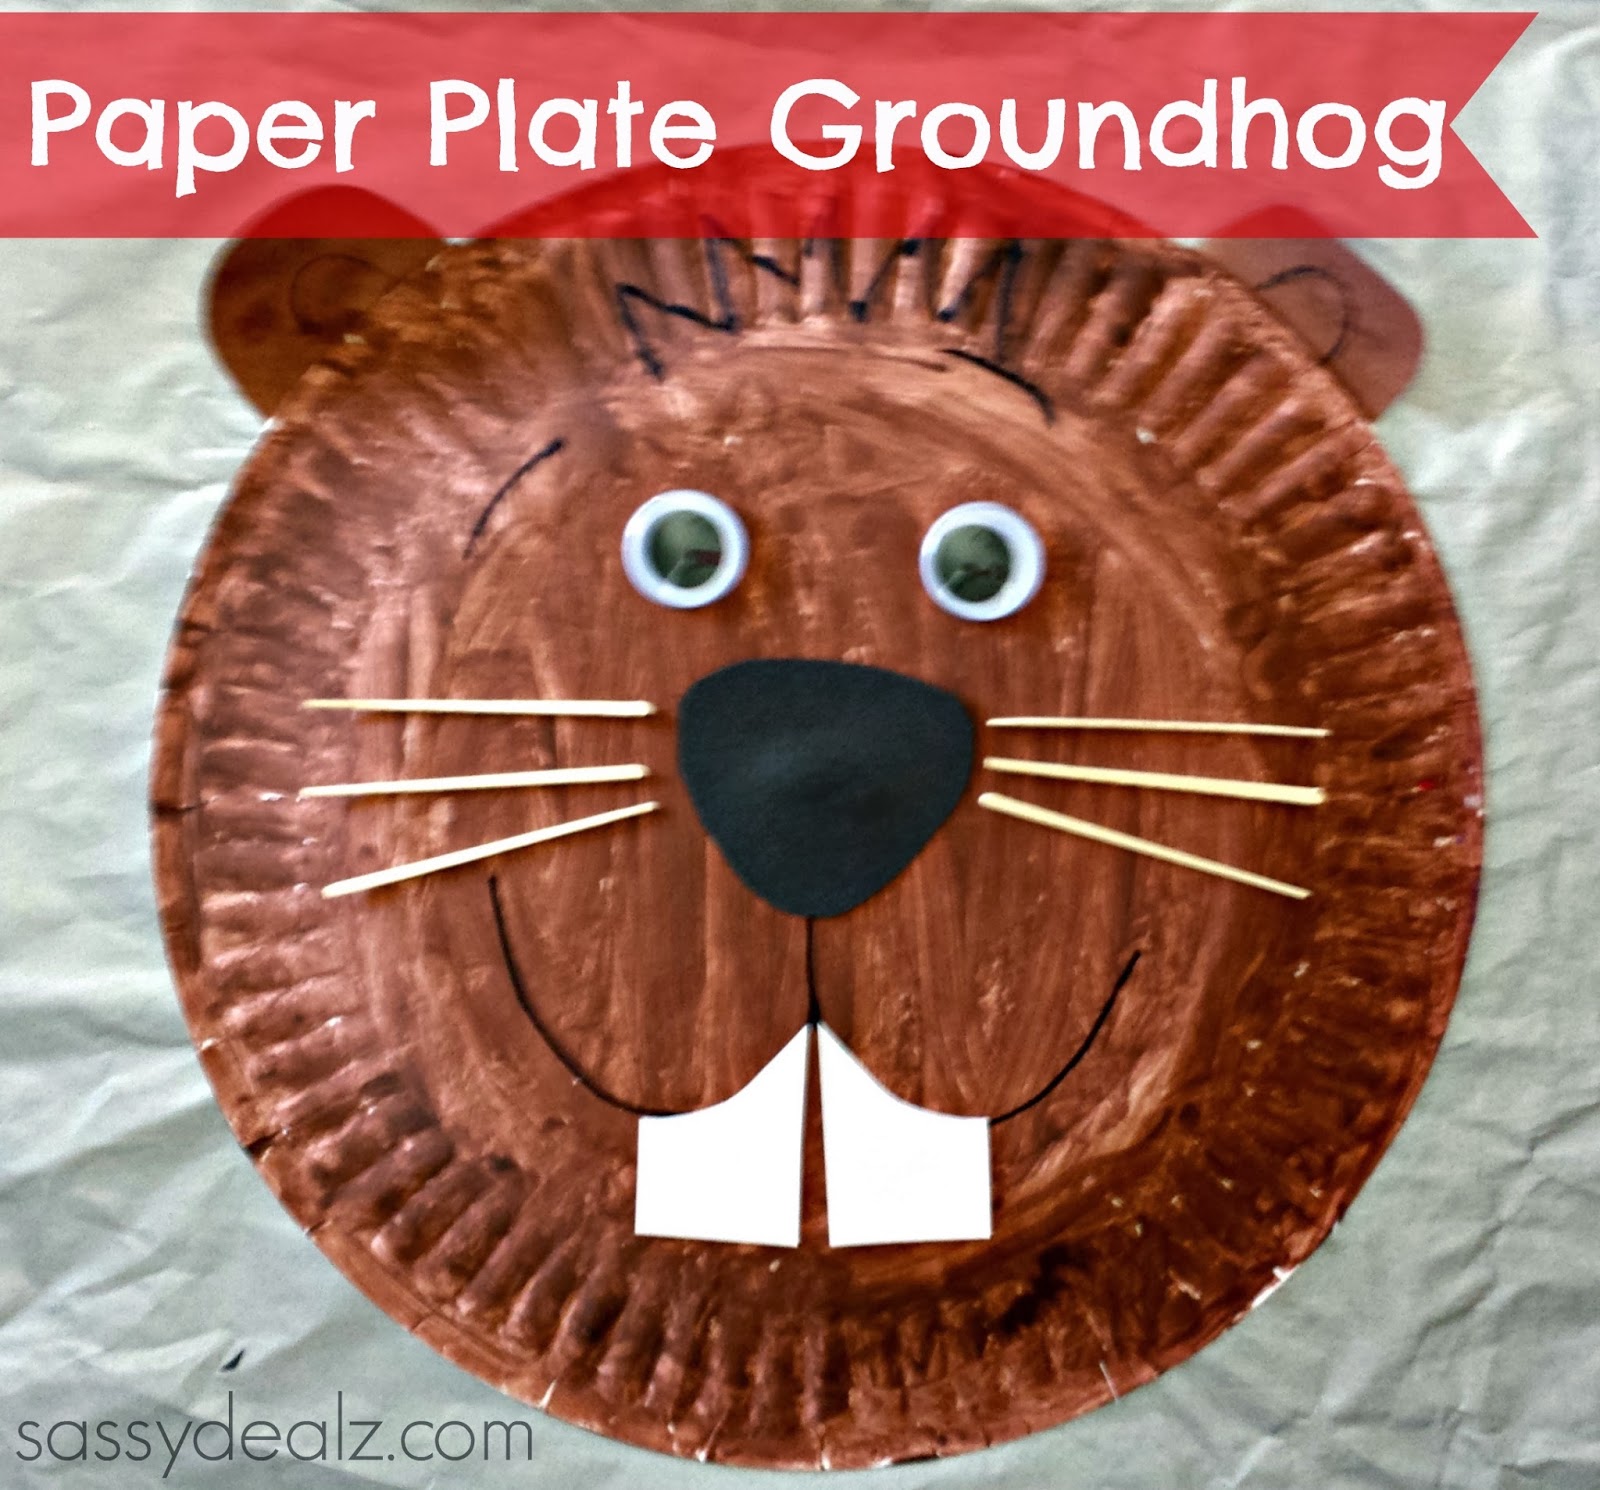 Groundhog Paper Plate Craft